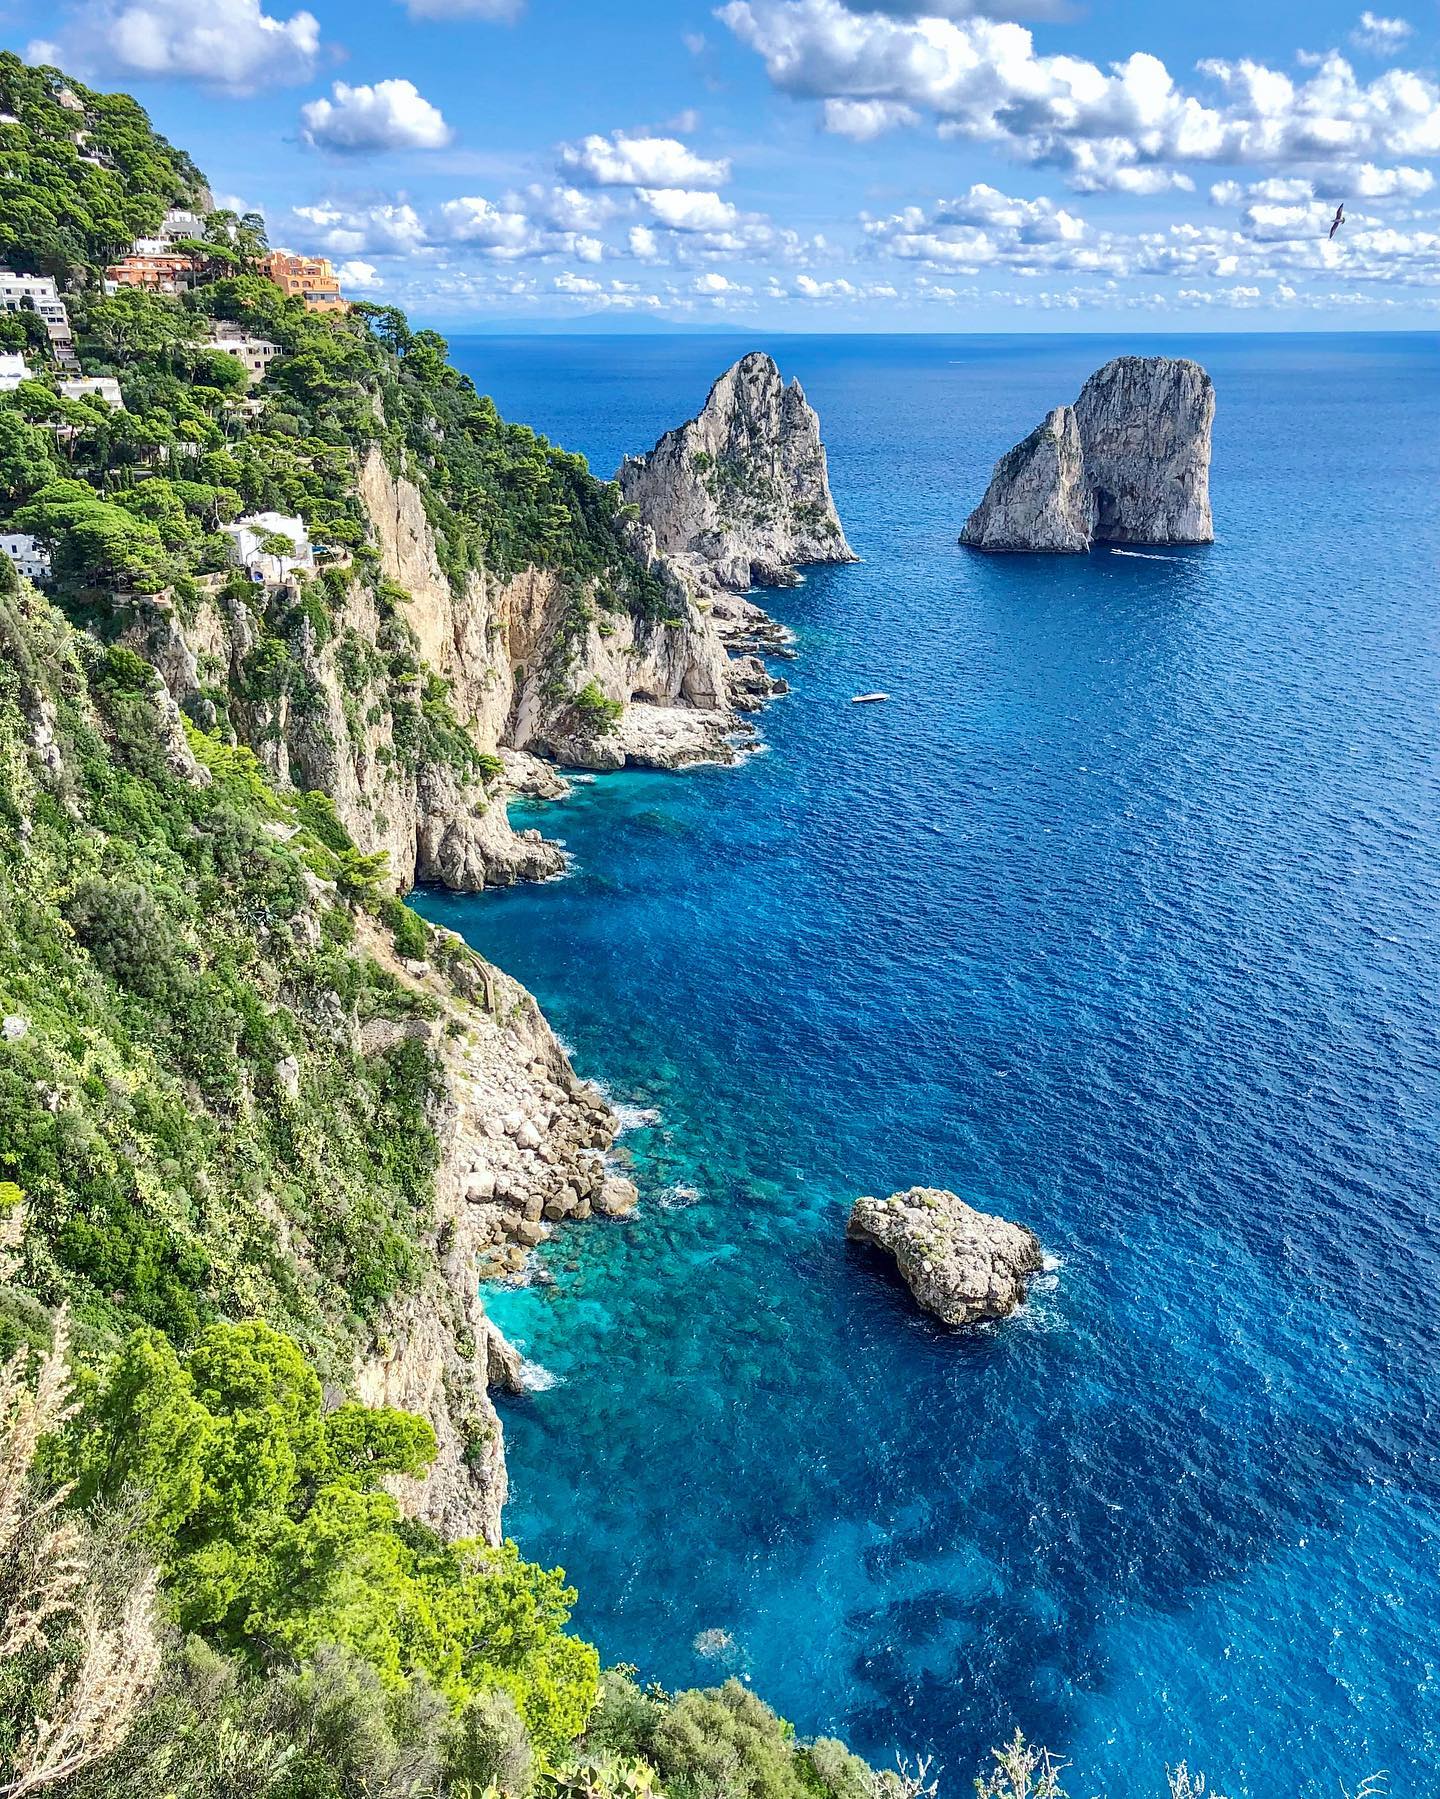 Capri is an idyllic island off the Amalfi Coast of southern Italy with outstanding coastal scenery. Here you can see the 3 famous Faraglioni: Stella, Mezzo and Scopolo.
.
.
.
#capri #capriitaly #capriamalfi #capriamalficoast #amalfi #amalficoast #amalfiküste #amalficoastitaly #amalfitancoast #amalficoast_italy #positano #faraglioni #faraglionirocks #faraglionidicapri #faraglionidiscopello #faraglionicapri #rocks #sea #turquoise #sealovers #seaside #italia #italy #italiacapri #italycapri #caprifaraglioni #blue #cloudy #clouds #travel